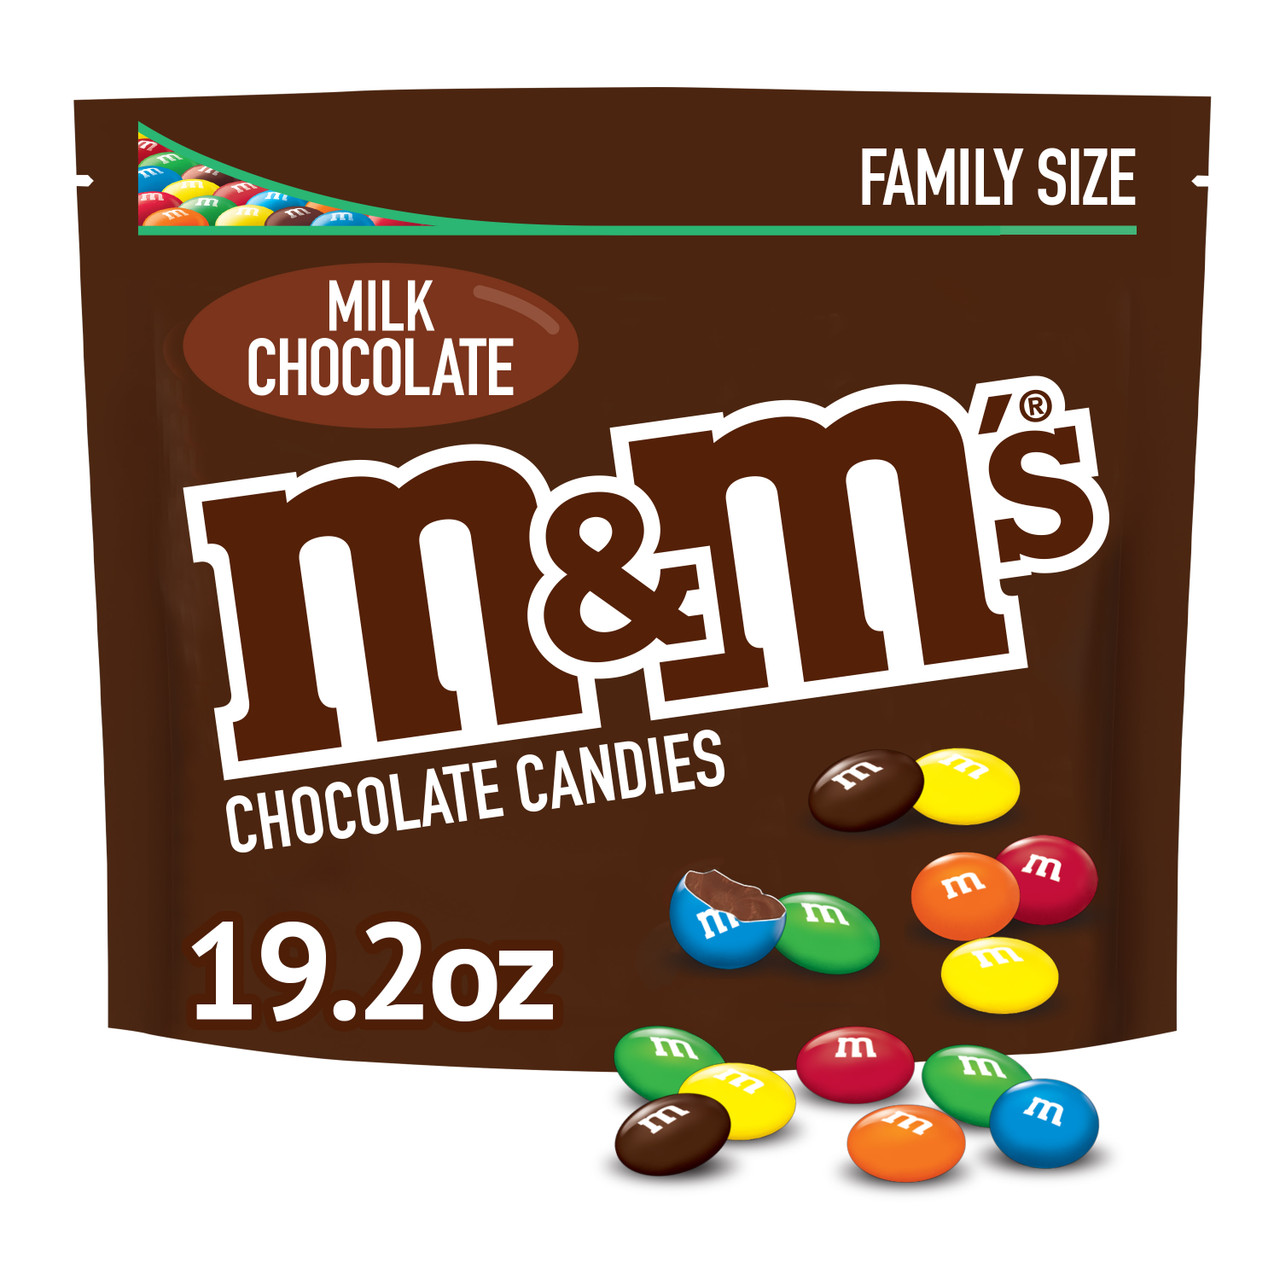 M&M's Crispy Fun Size, Chocolate